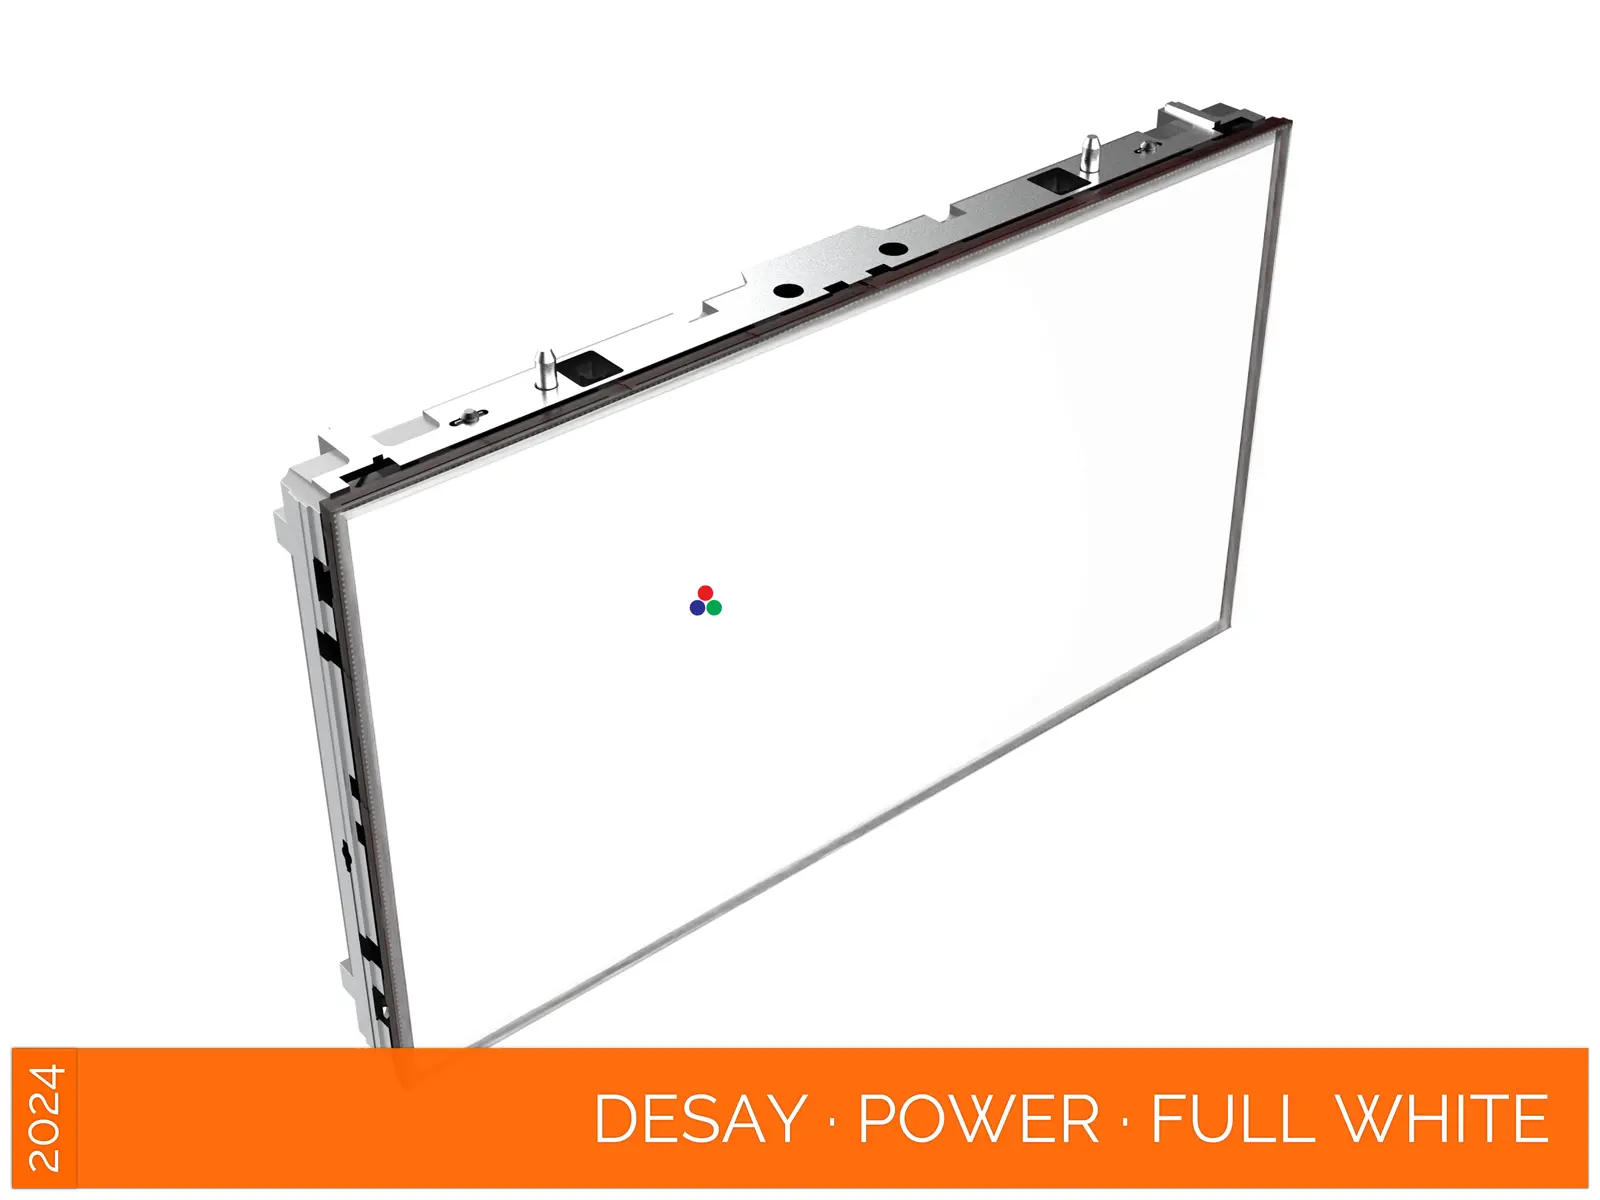 Desay · Series · Direct View LED Display Panel · Full Pixel Range · Panel Dimensions · Power Draw · Full White Display · Watts Per Square Meter · NovaStar COEX MX CX · Vision Management Platform · Viplex · review · price · cost